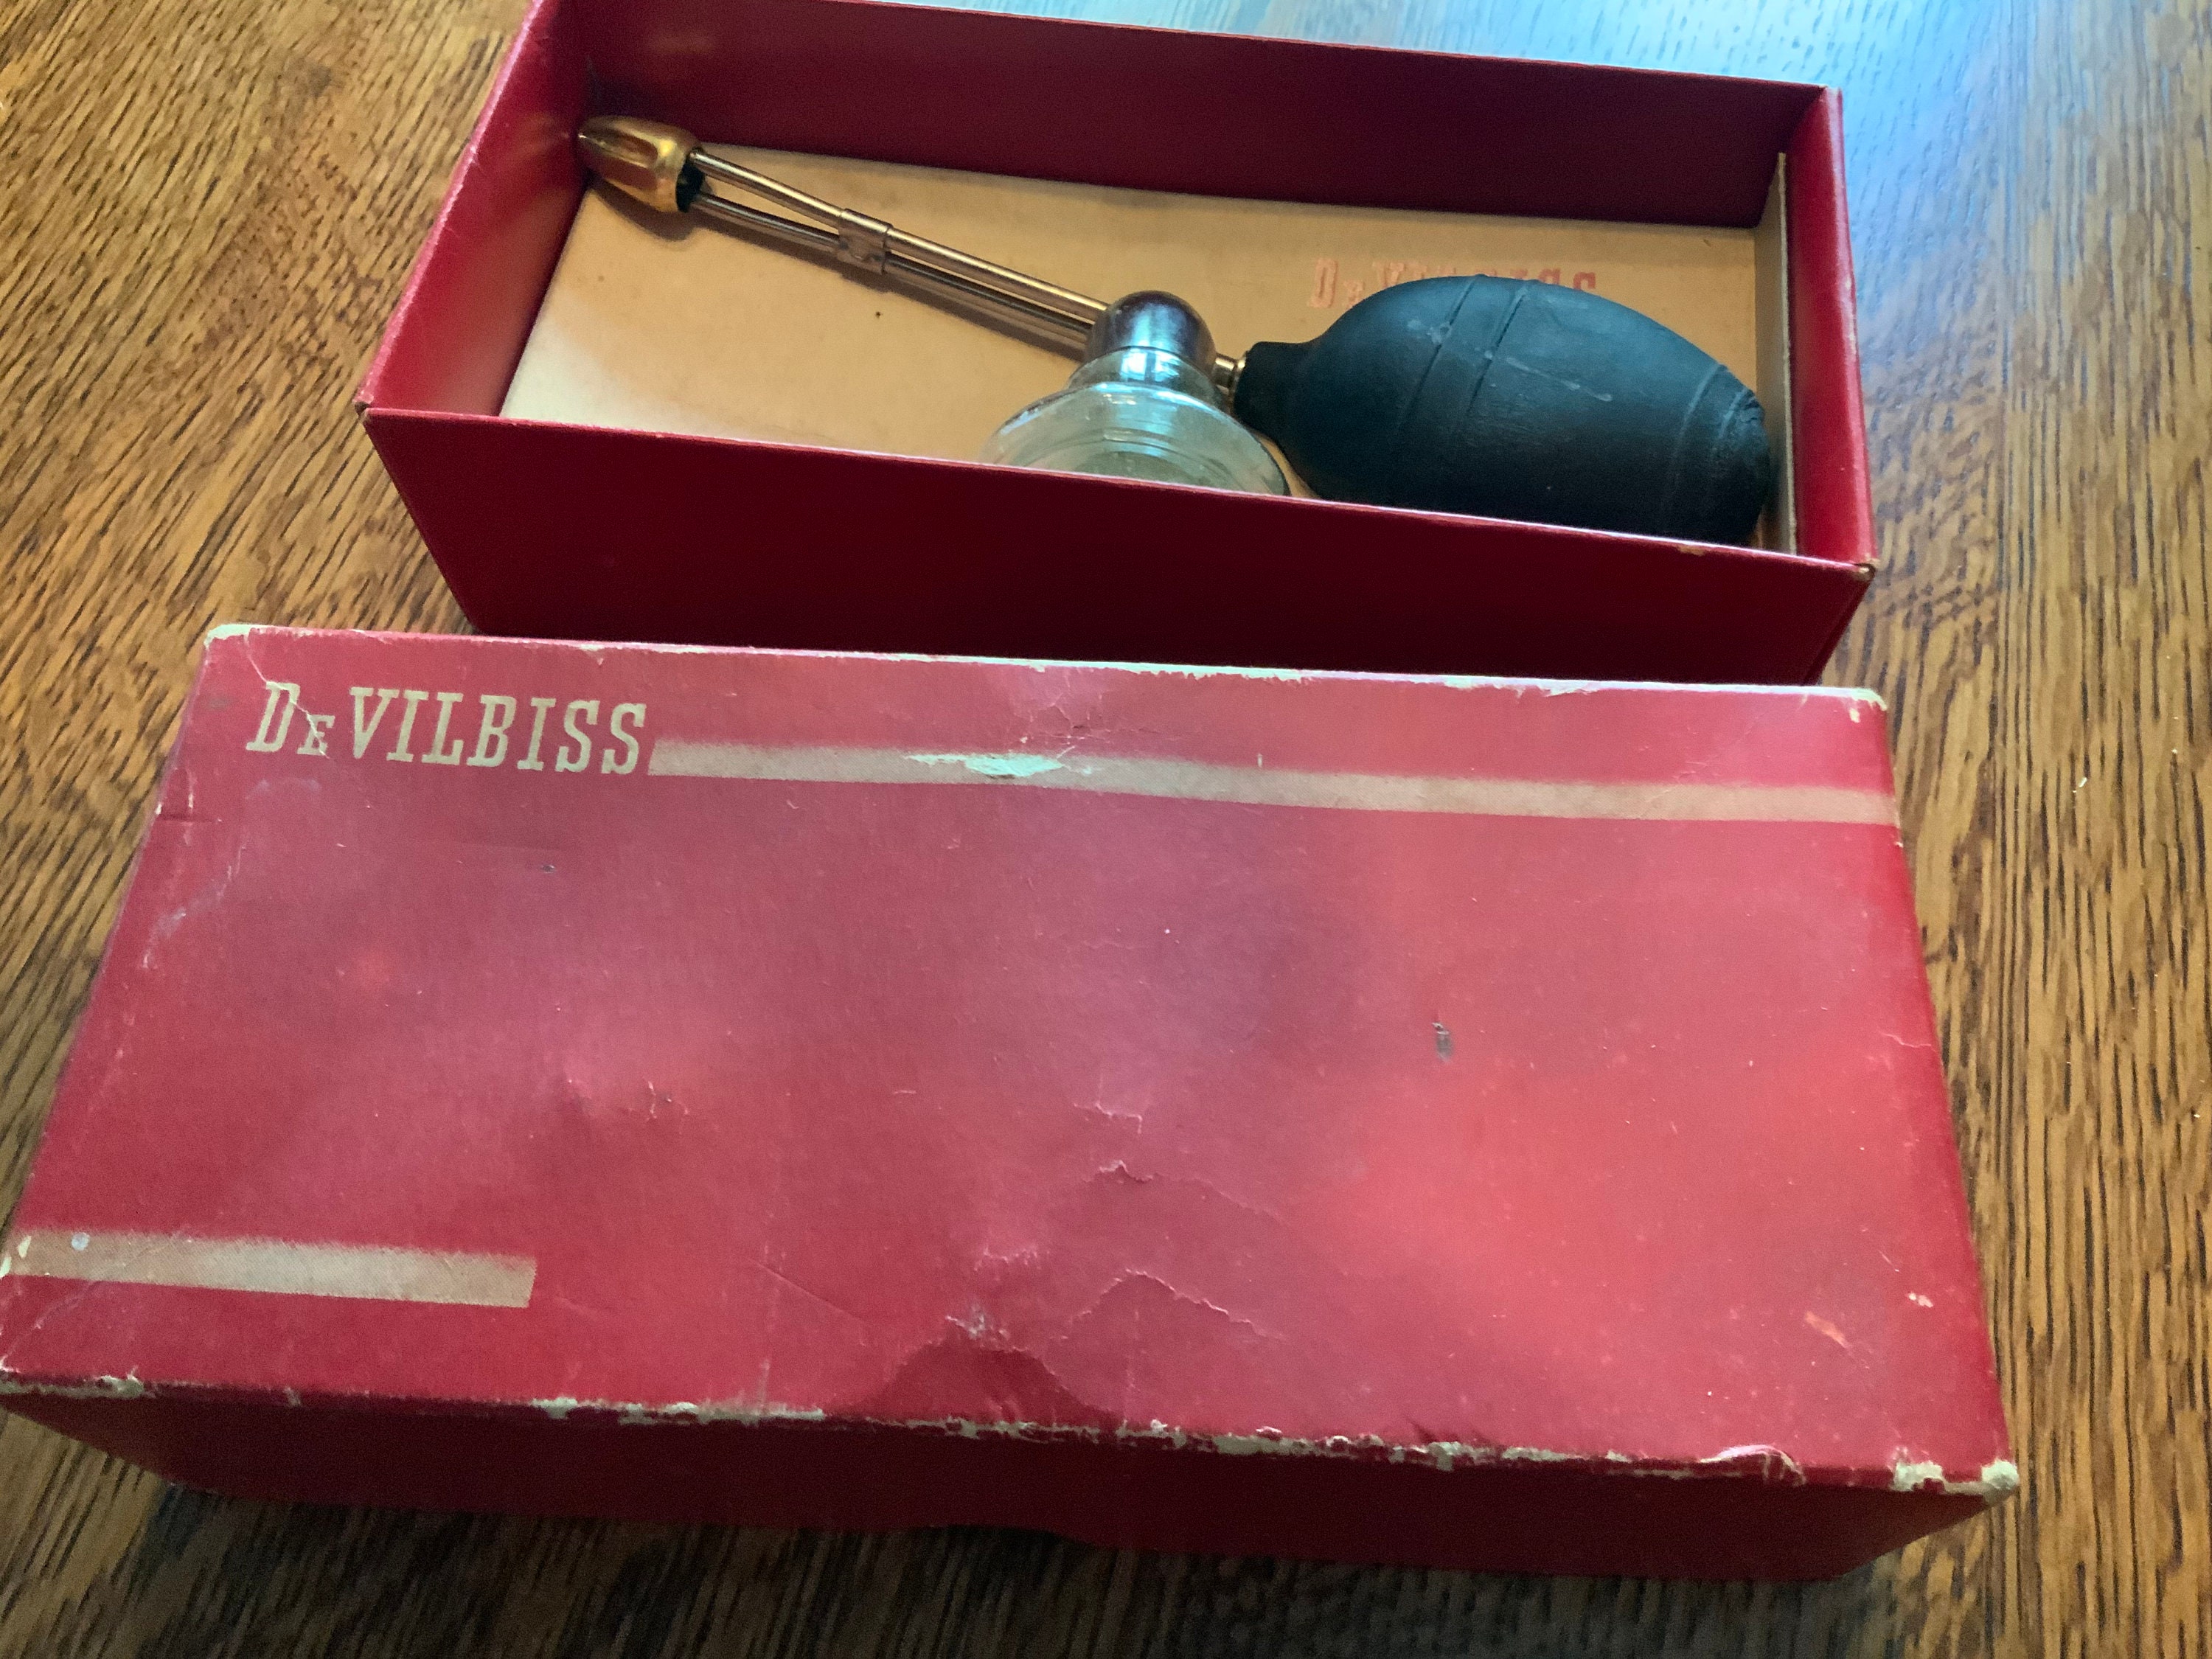 Devibliss Vintage Atomizer With Original Box - Etsy